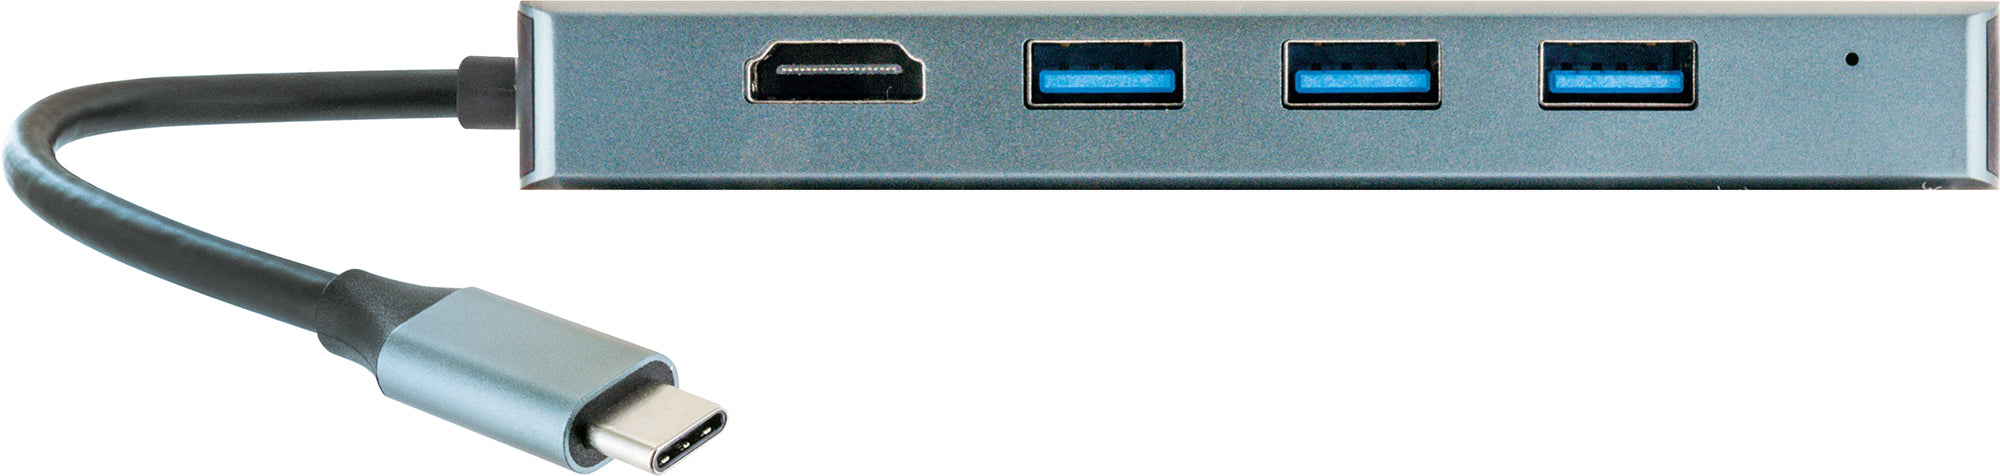 Andersson USB Type-C Hub 2.5